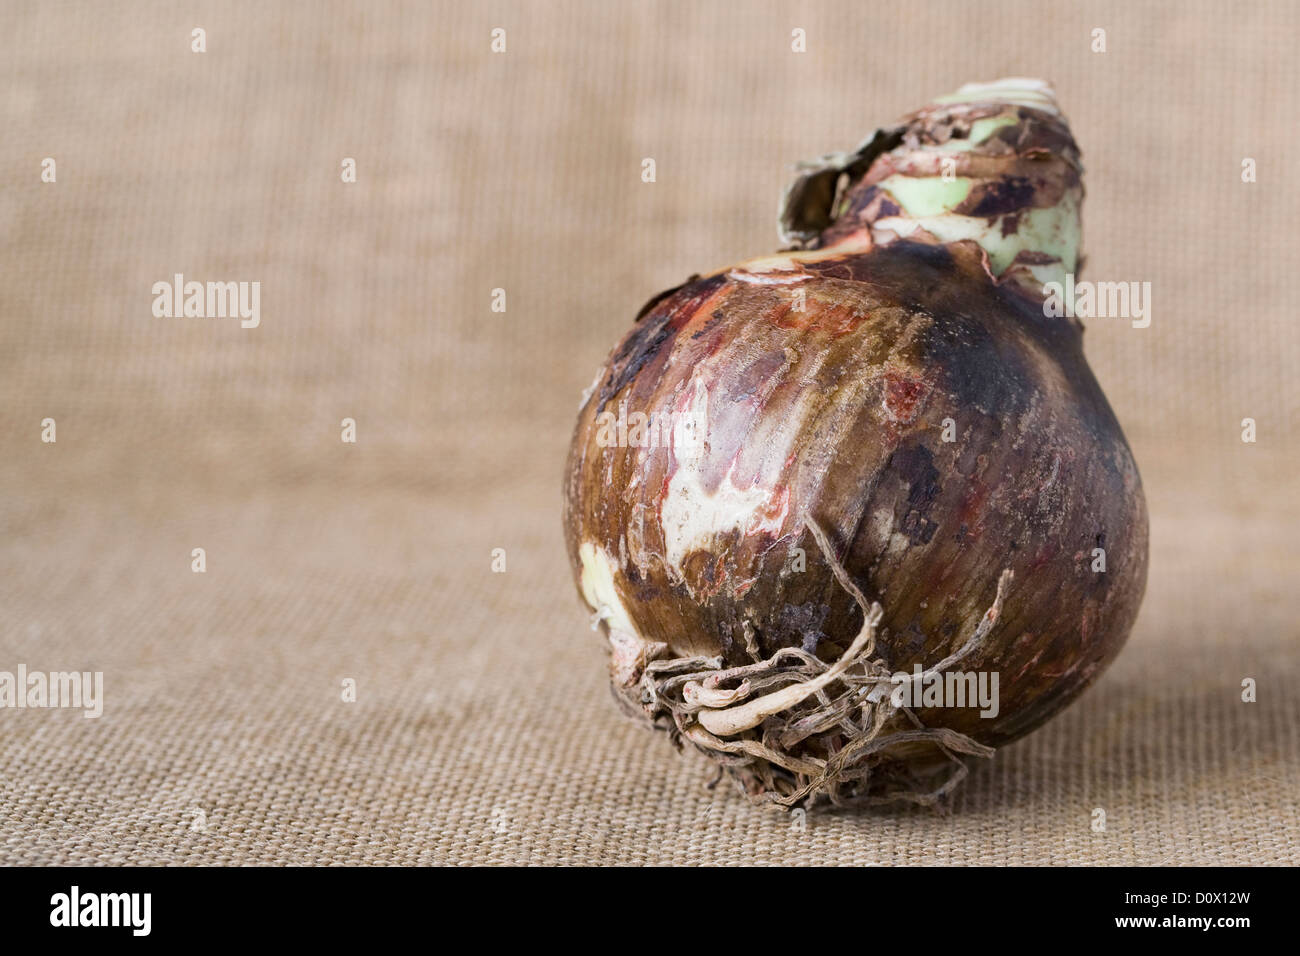 A single Hippeastrum bulb on a hessian background. Amaryllis bulb. Stock Photo